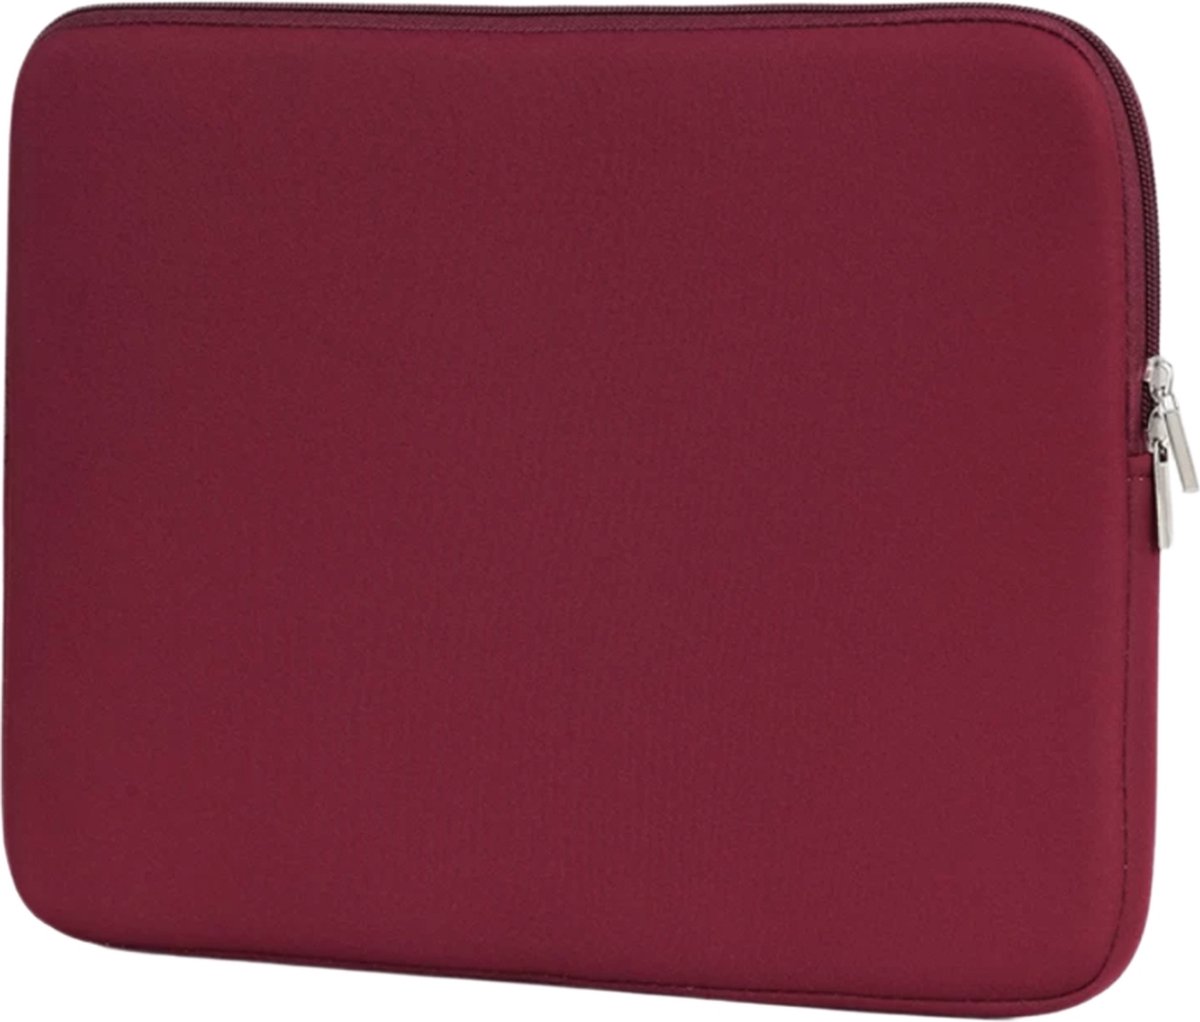 Laptopcase – sleeve – spatwaterdicht – 14,6 inch – laptoptas – bordeaux rood - Soft Touch